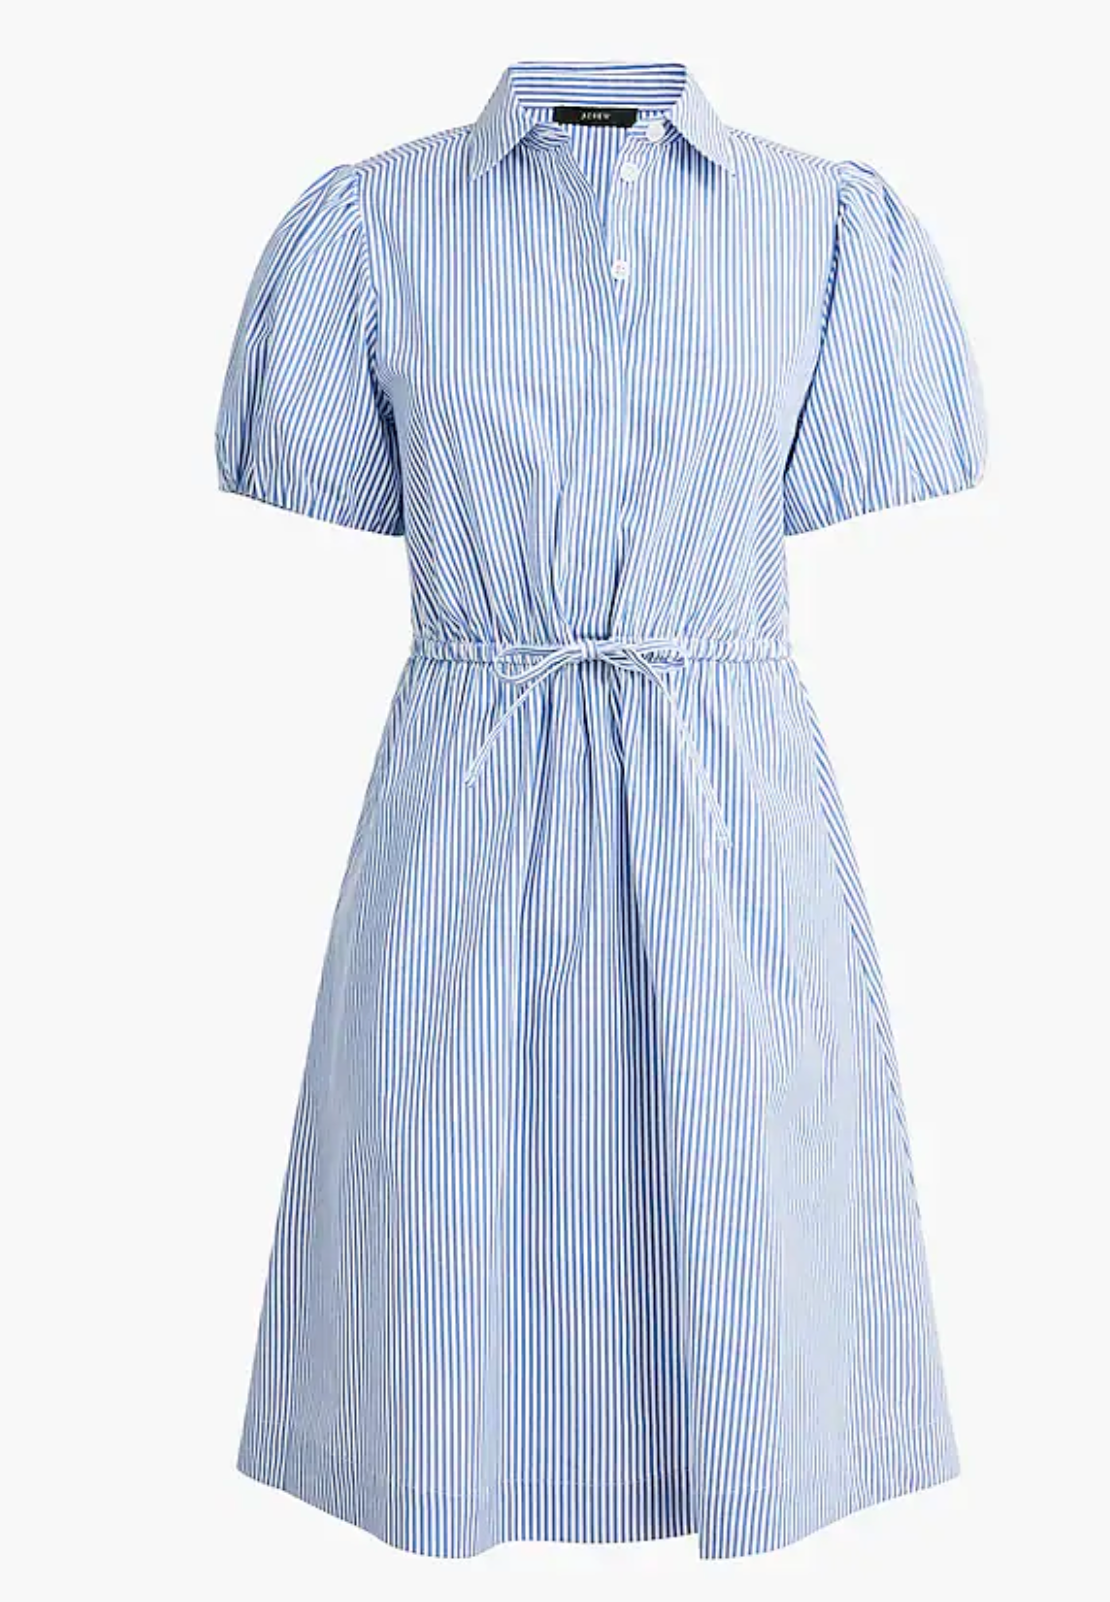 Short-sleeve collared mini dress